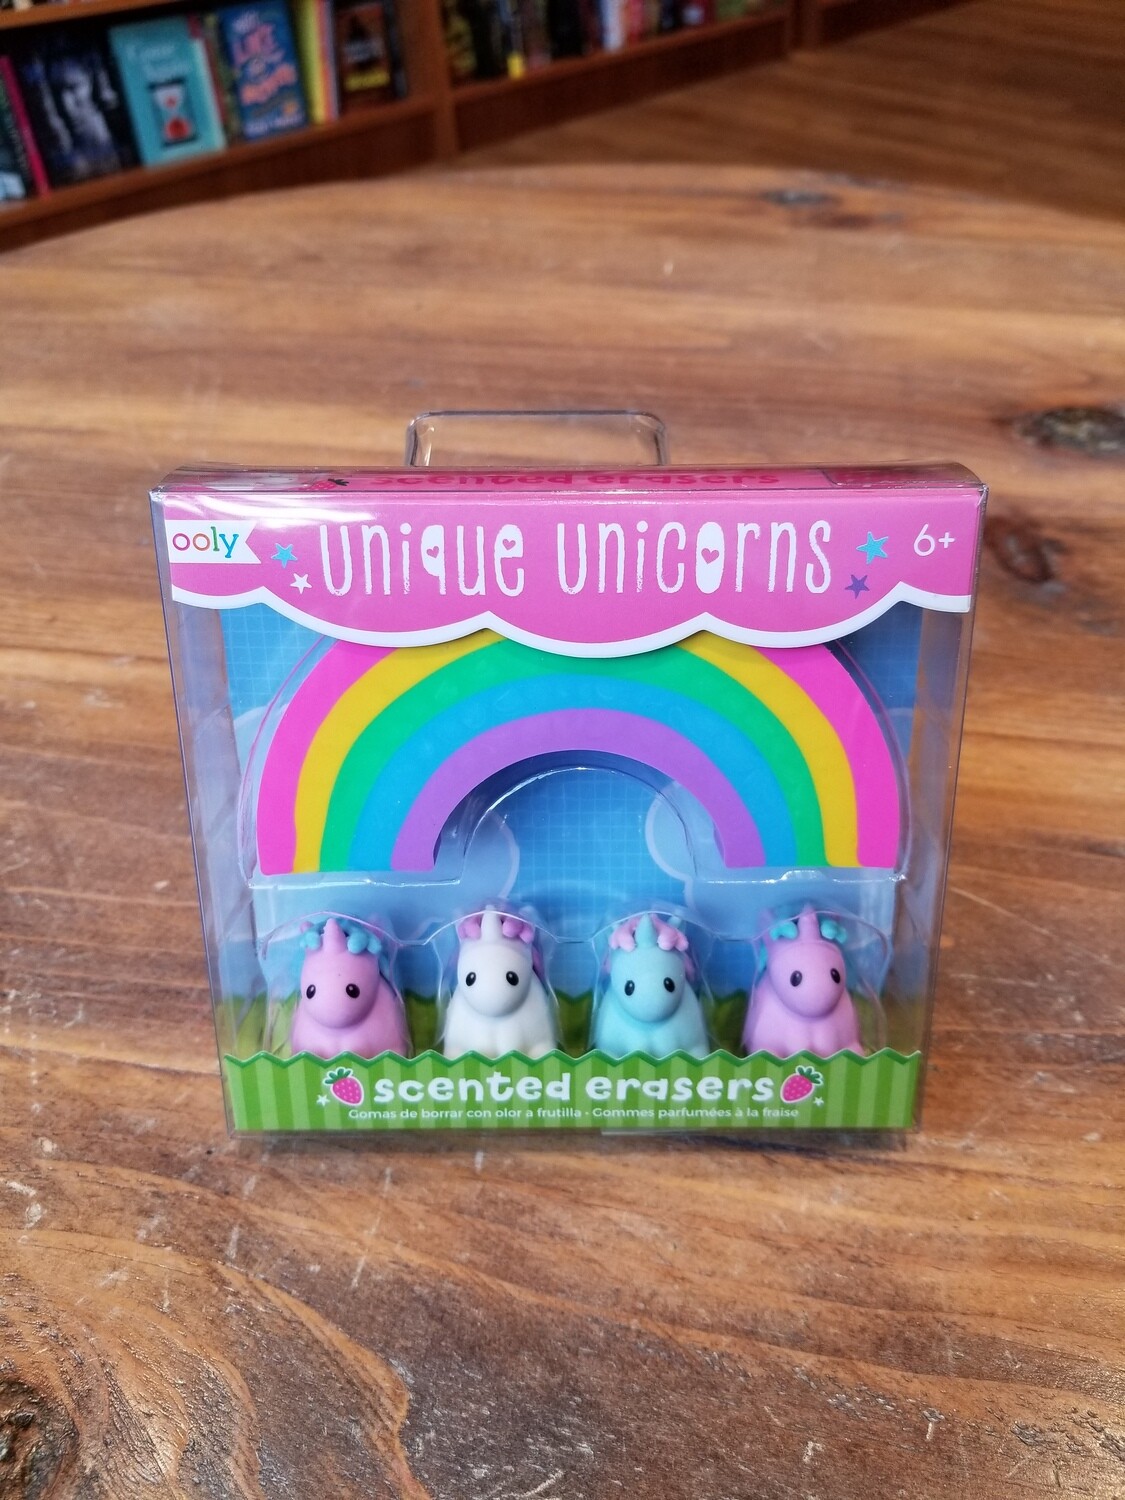 Unicorn Scented Erasers